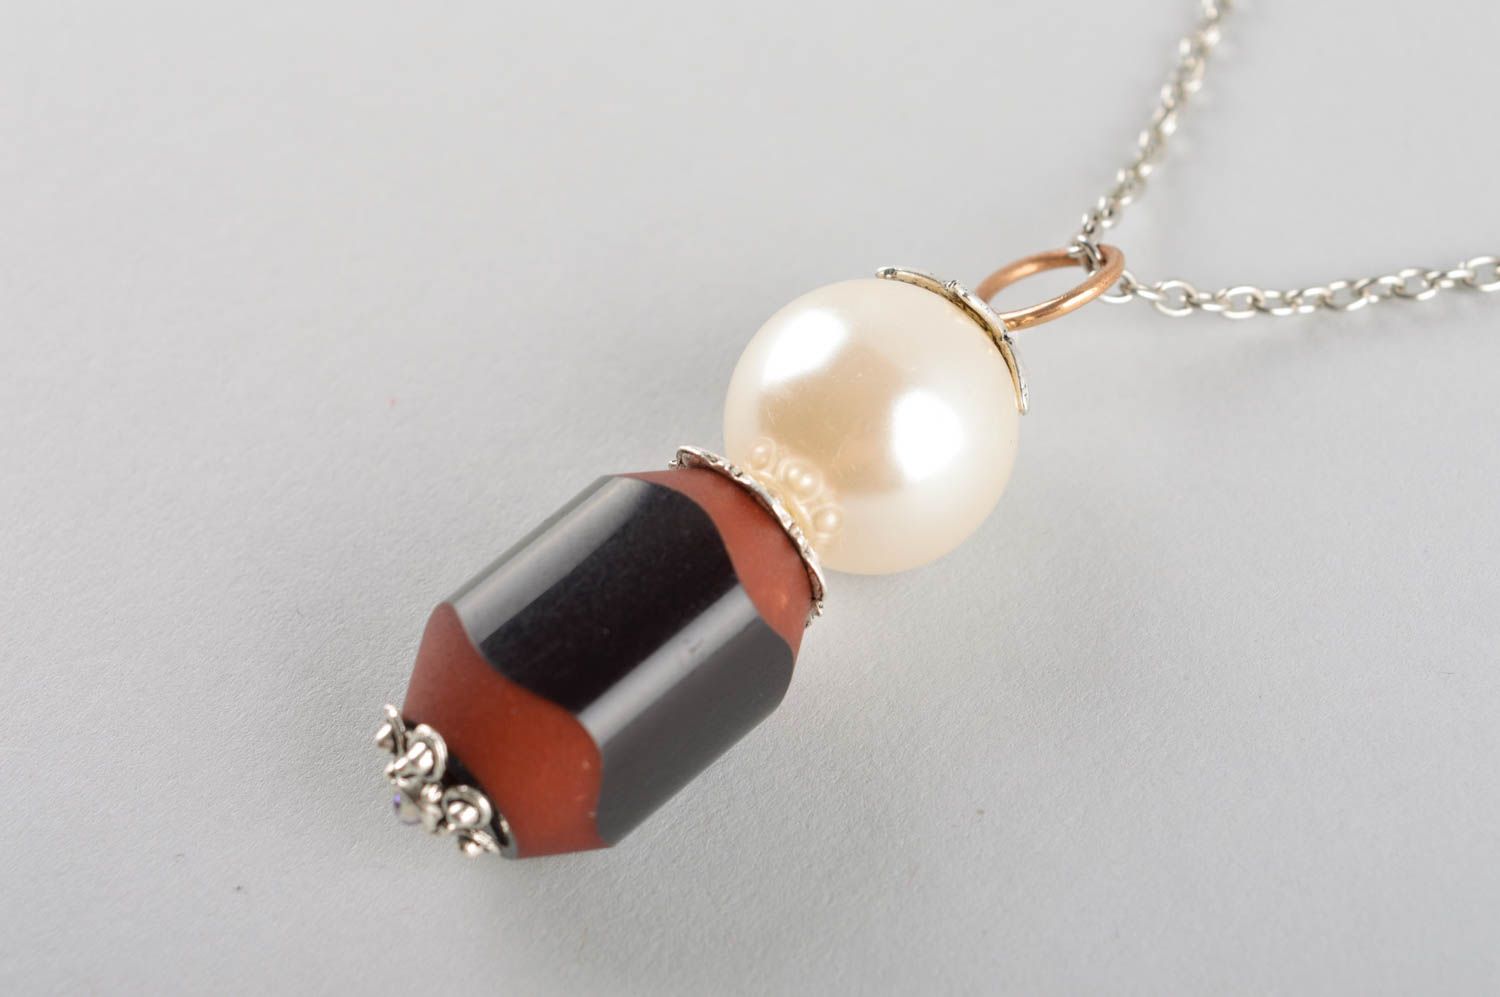 Chain pendant handmade wooden pendant fashion jewelry stylish pendant for women photo 3